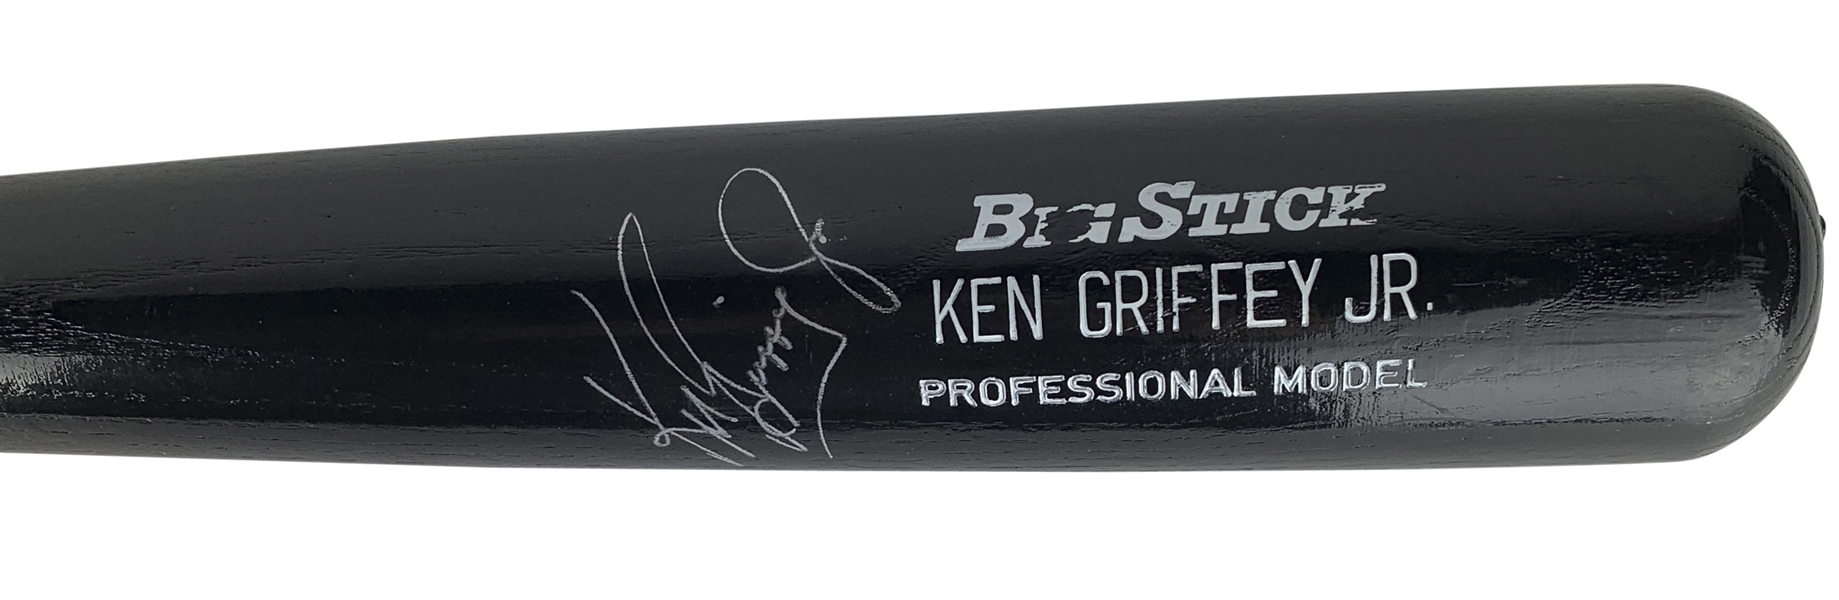 Ken Griffey Jr. Signed Big Stick Baseball Bat (JSA)